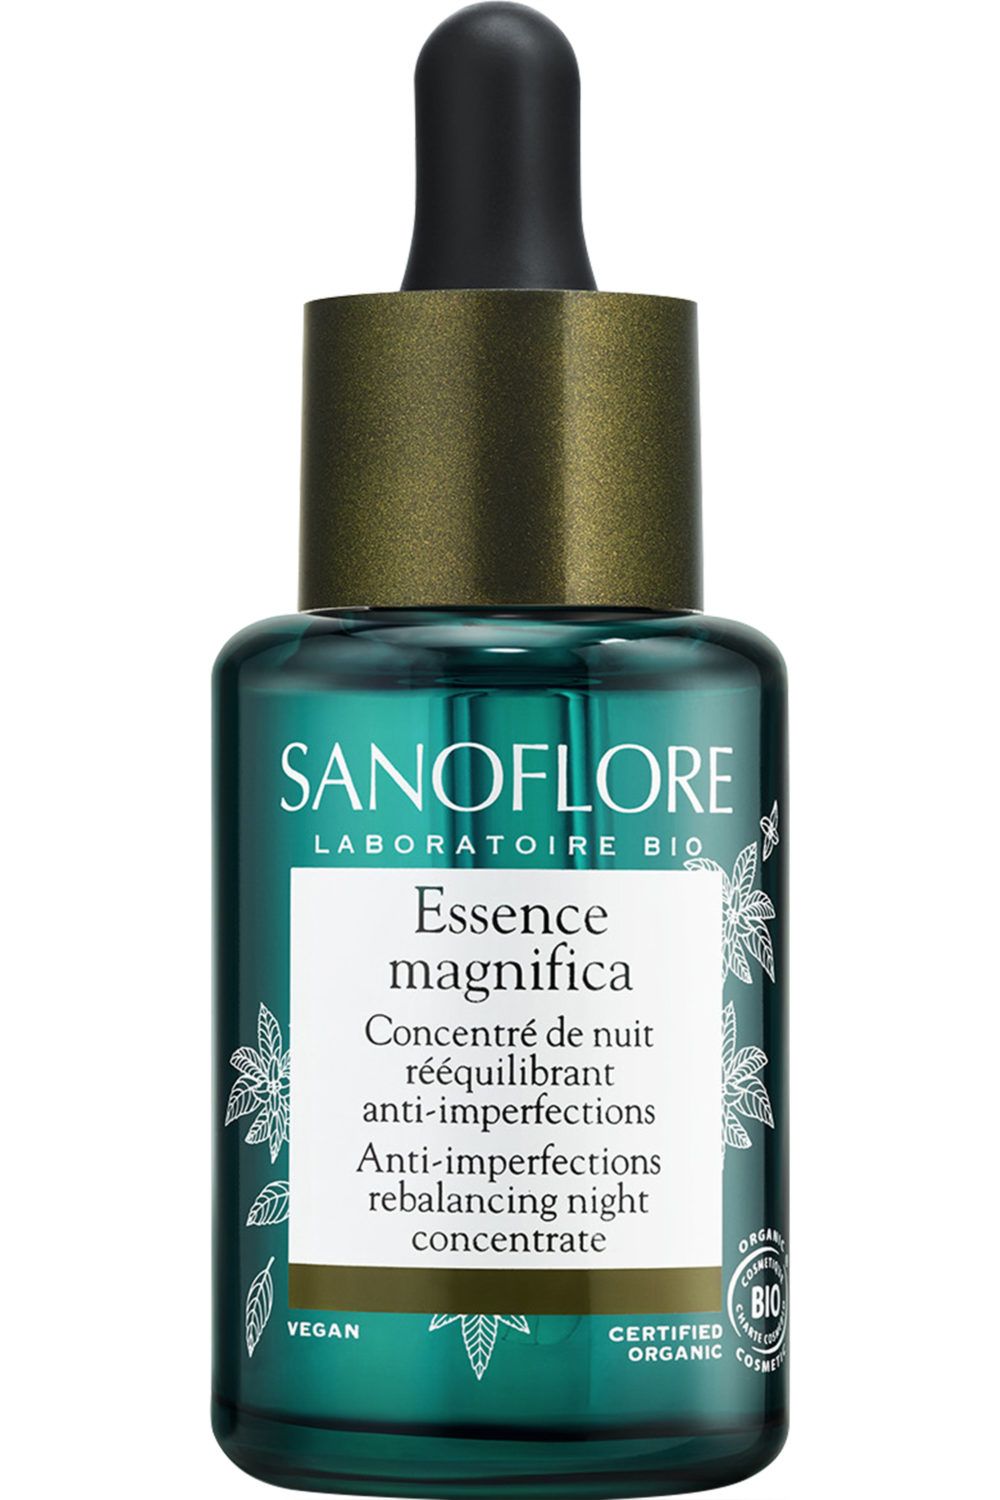 Sanoflore - Magnifica Essence 30ml